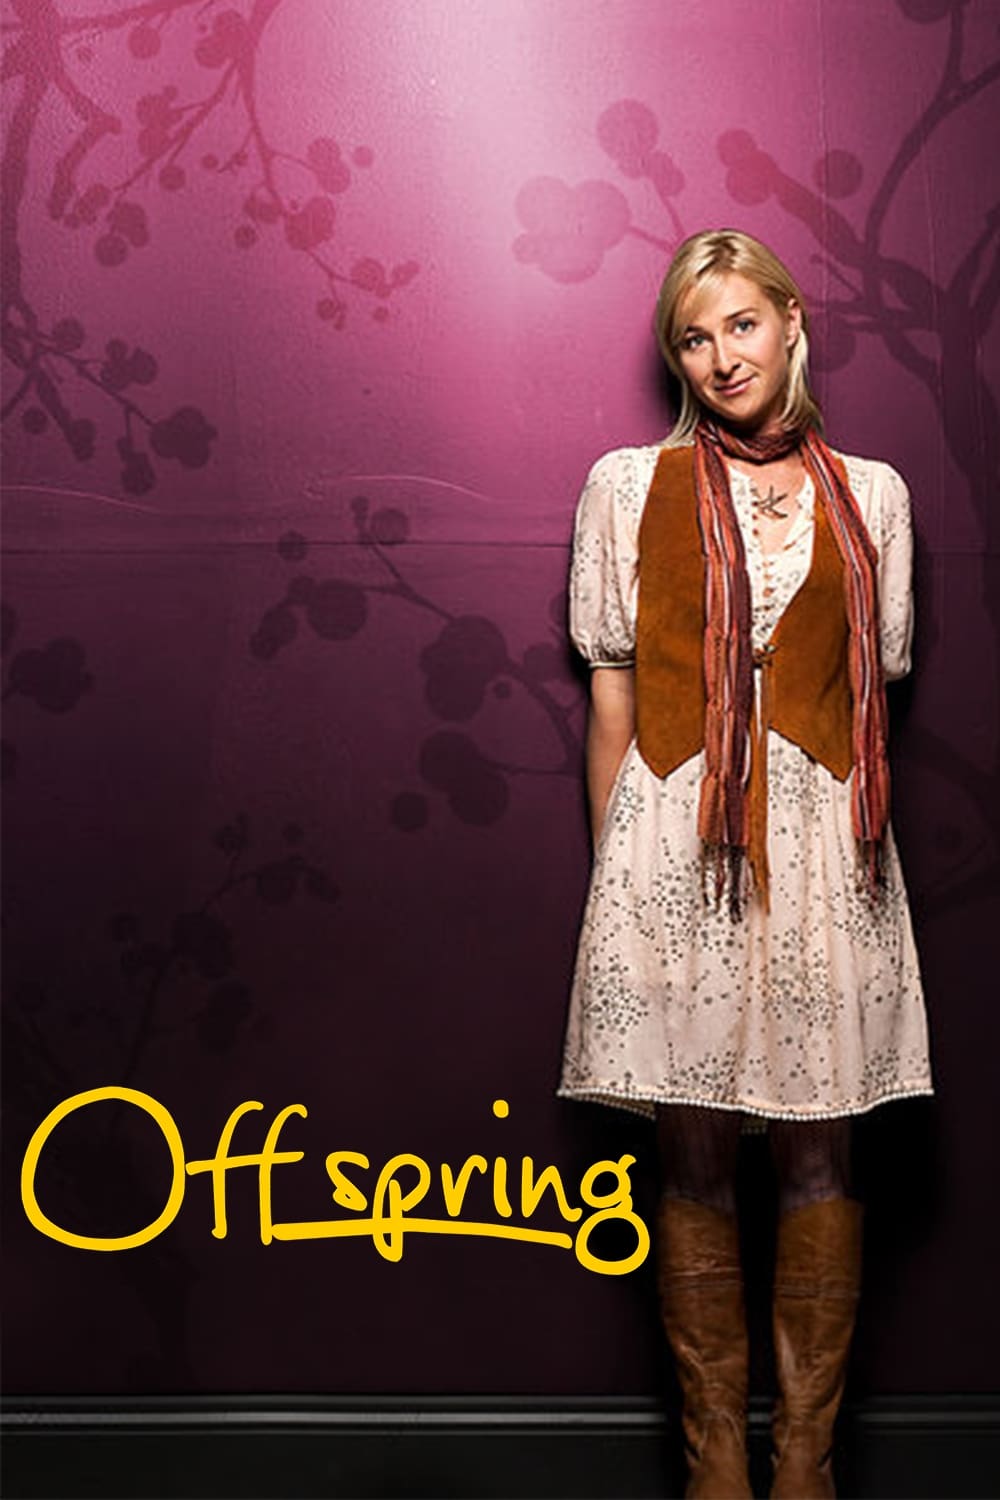 Offspring (2010)